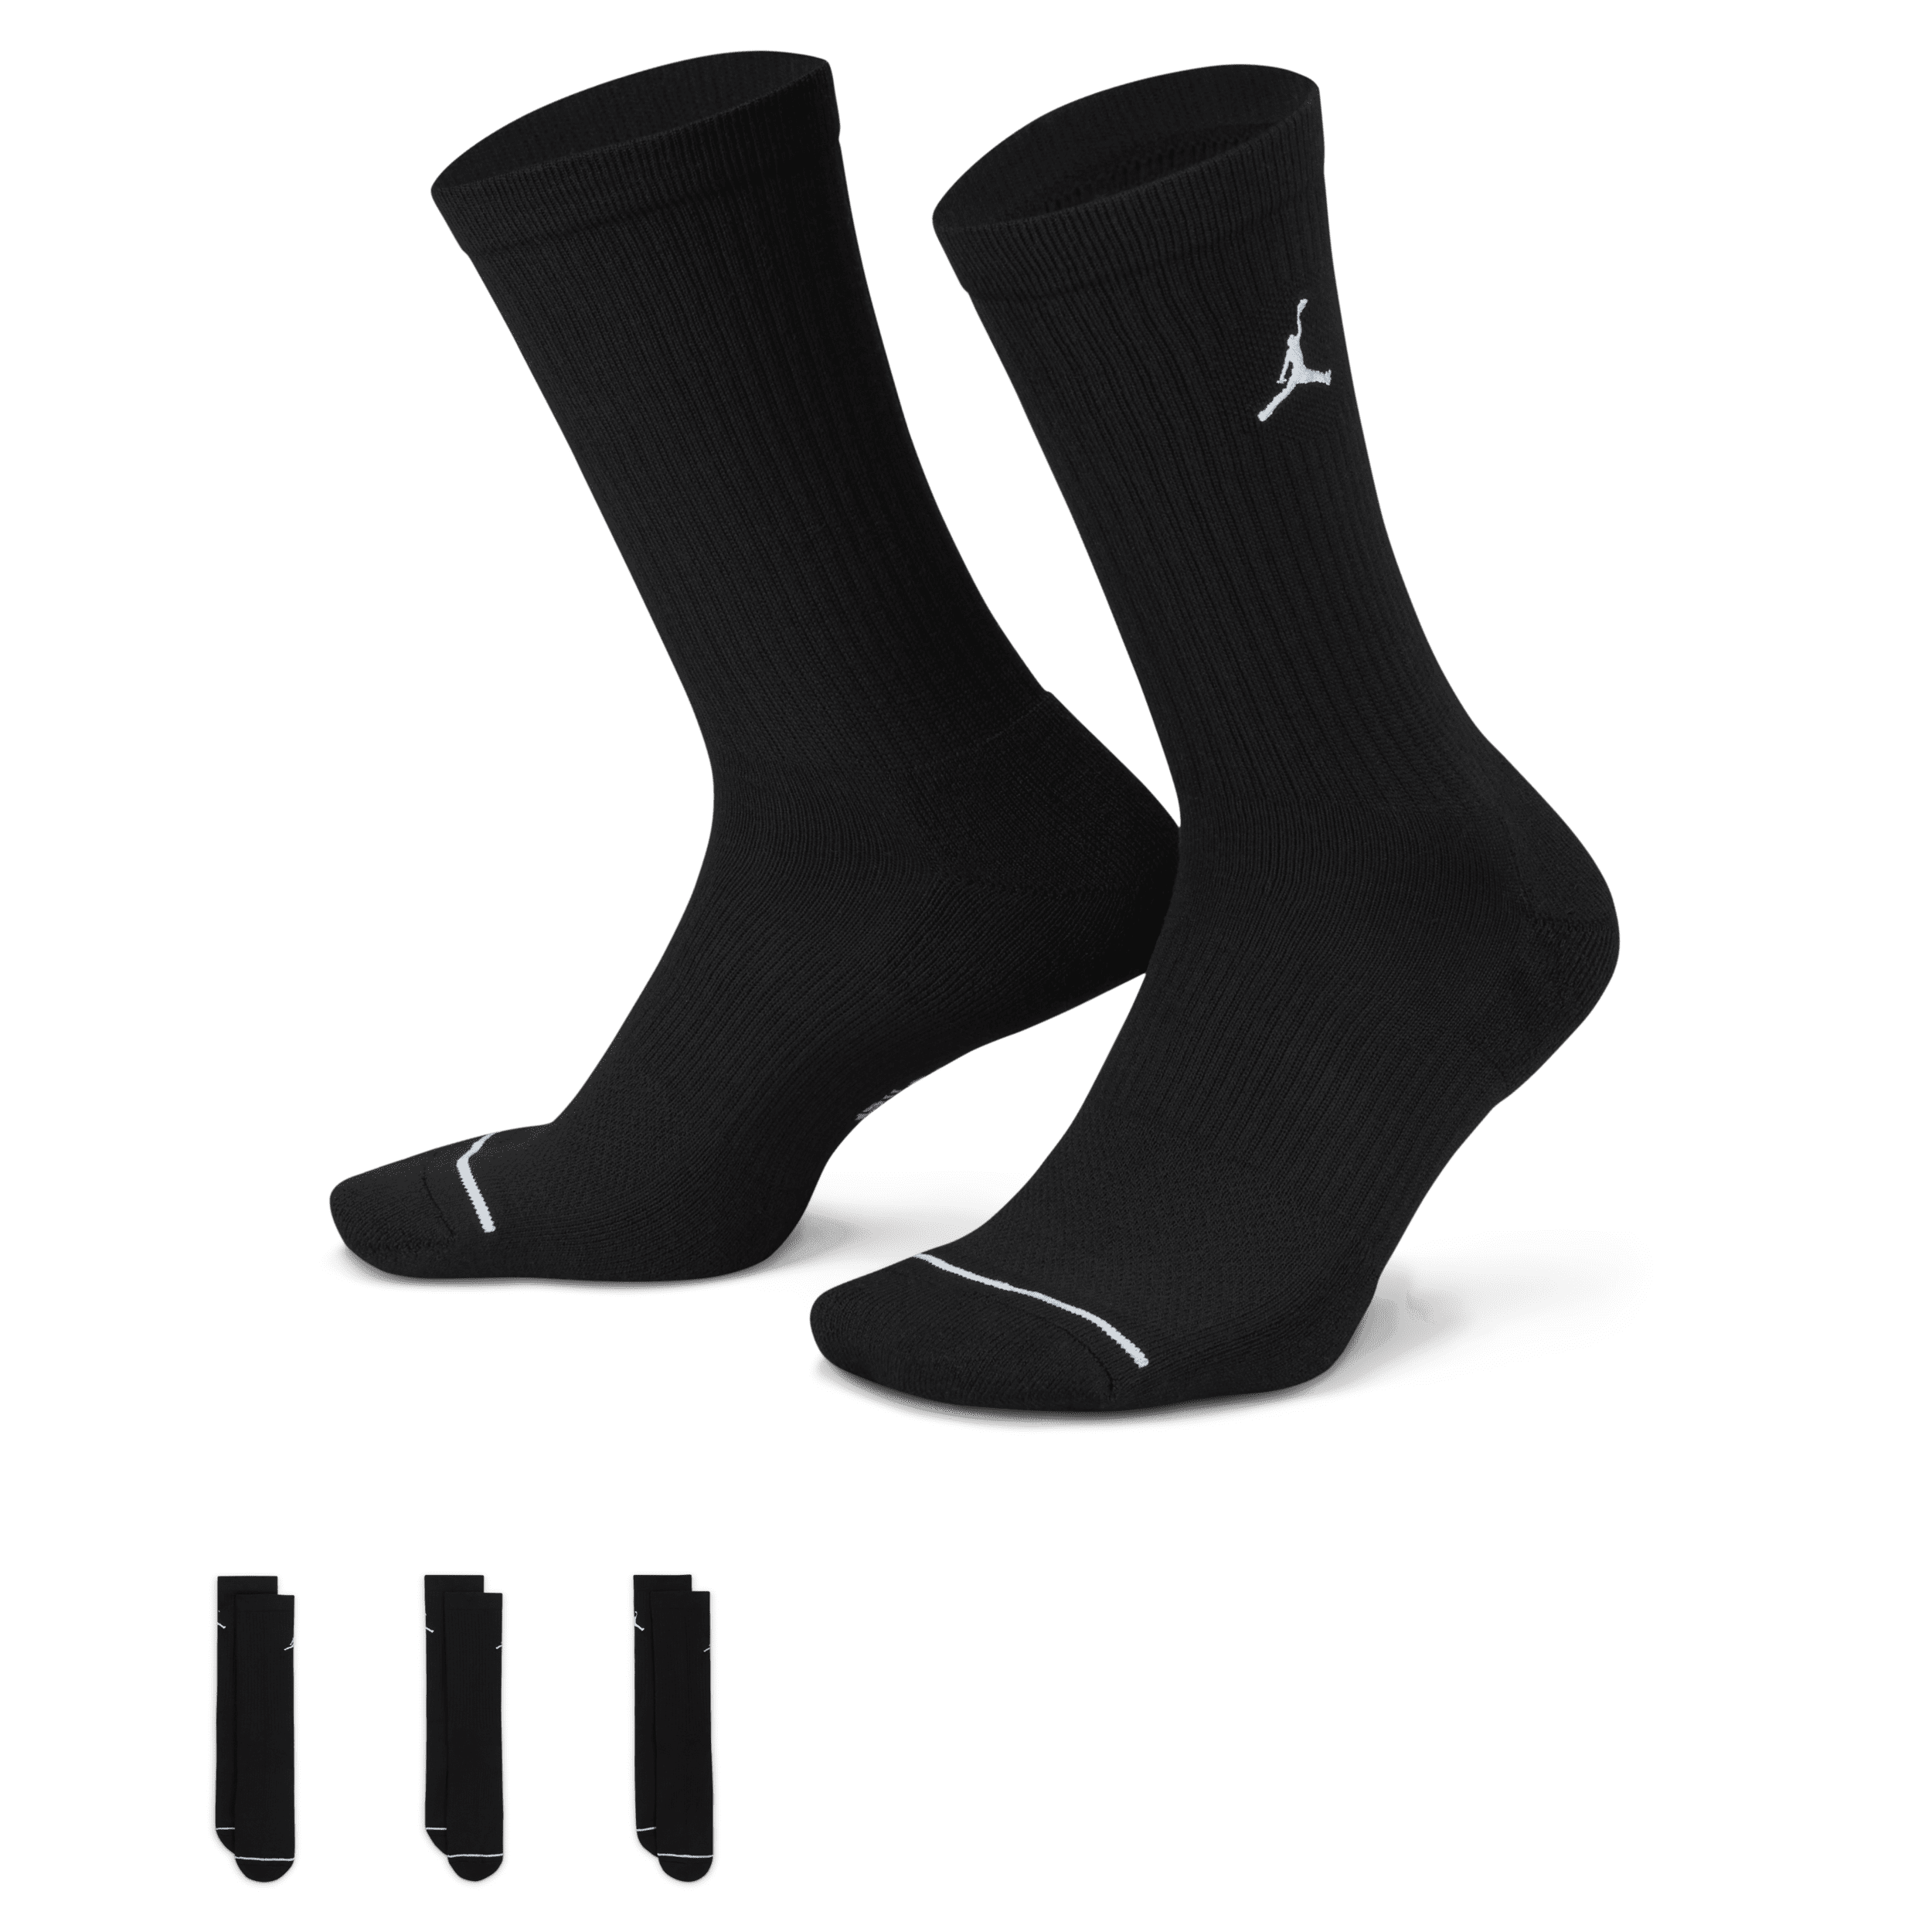 Nike Calze di media lunghezza per tutti i giorni Jordan (3 paia) - Nero